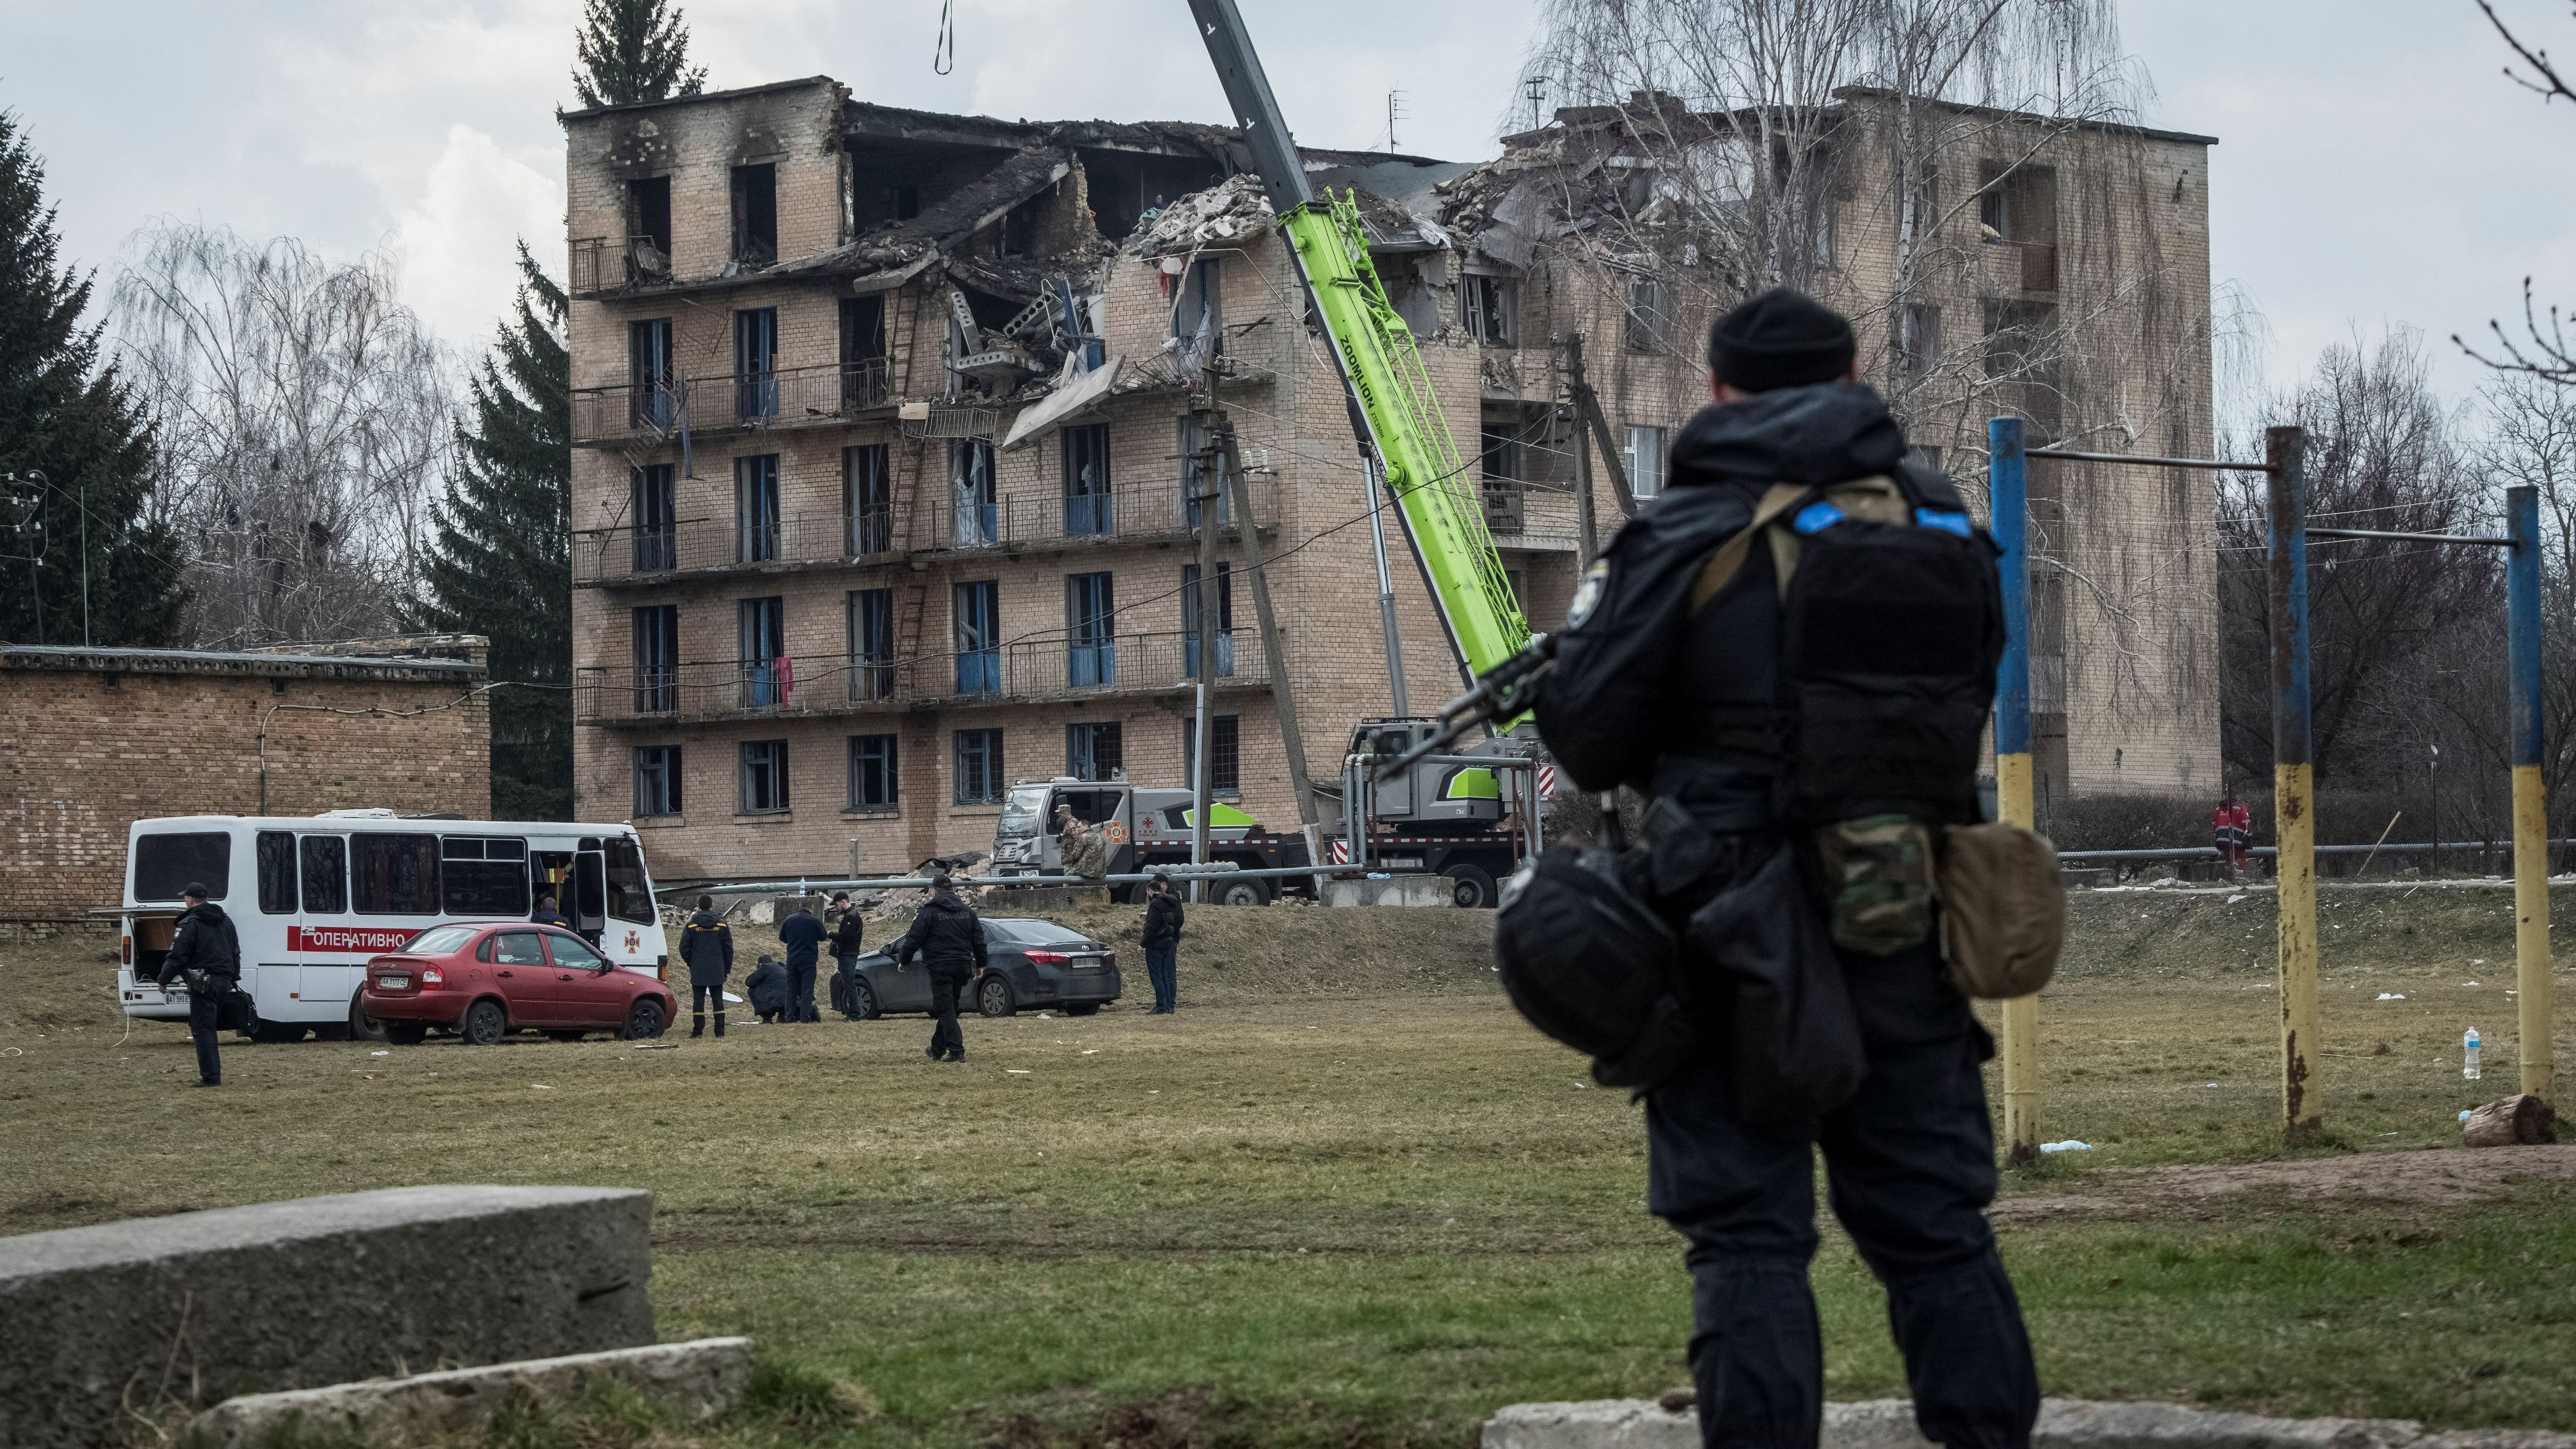 Rzhyshchiv in the Kyiv region suffered recent damage after a drone attack. /Vladyslav Musiienko/Reuters